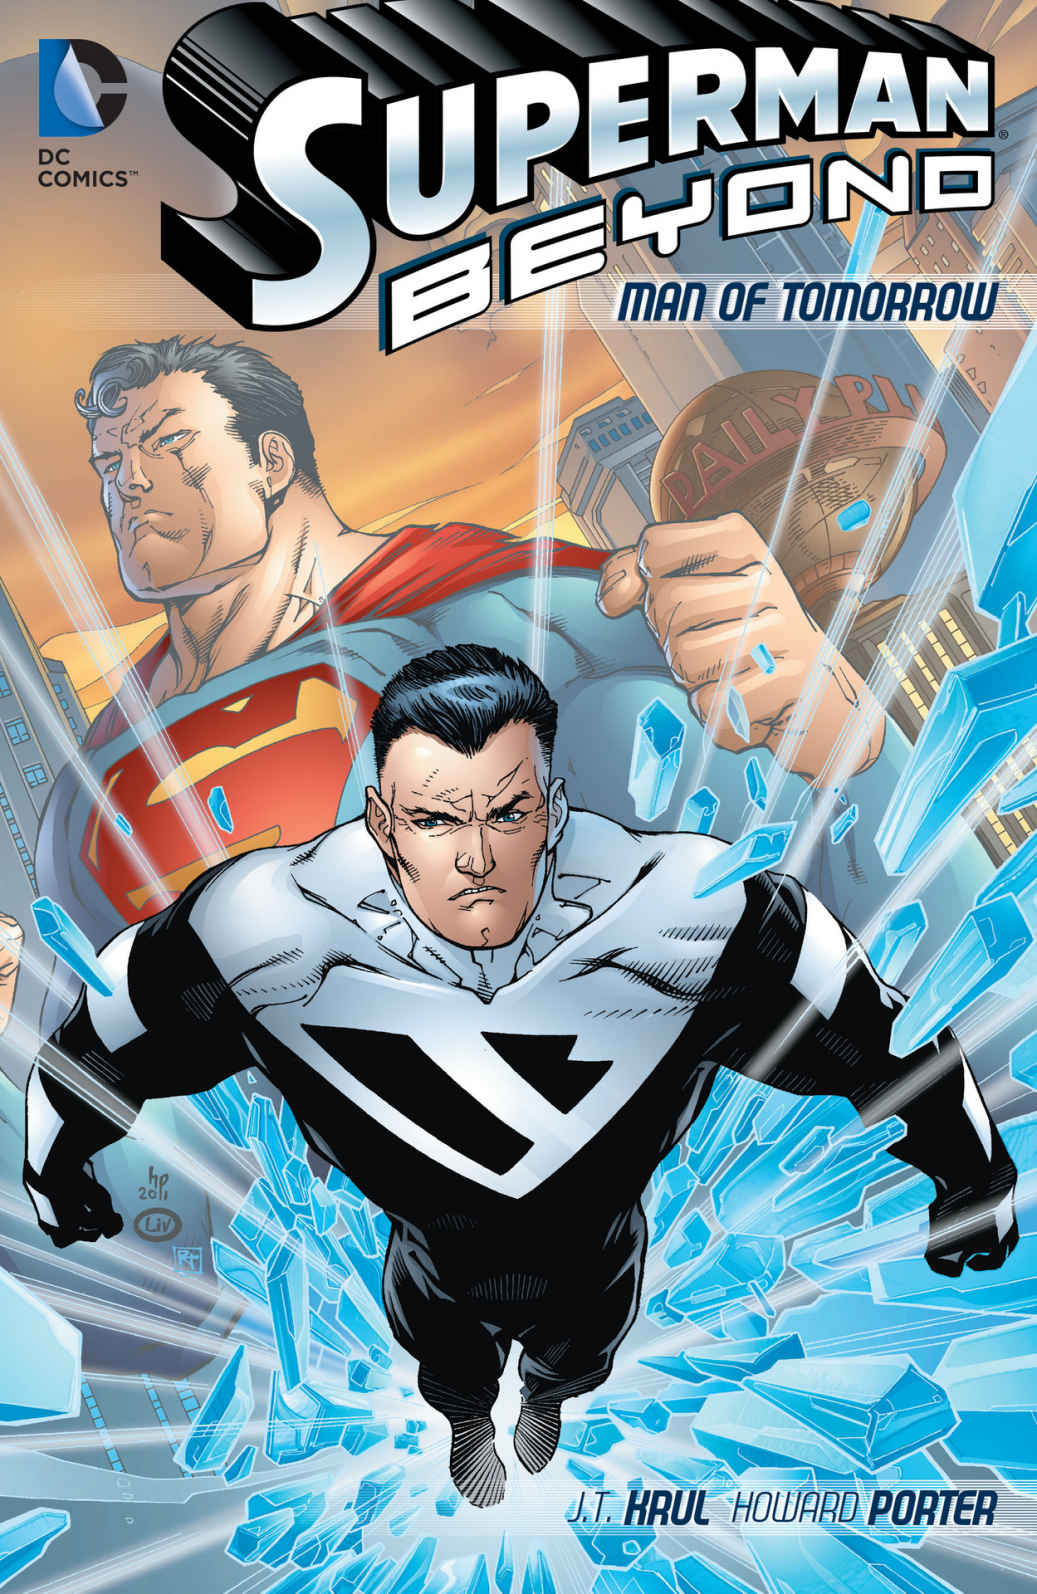 Superman Beyond Man of Tomorrow Graphic Novel